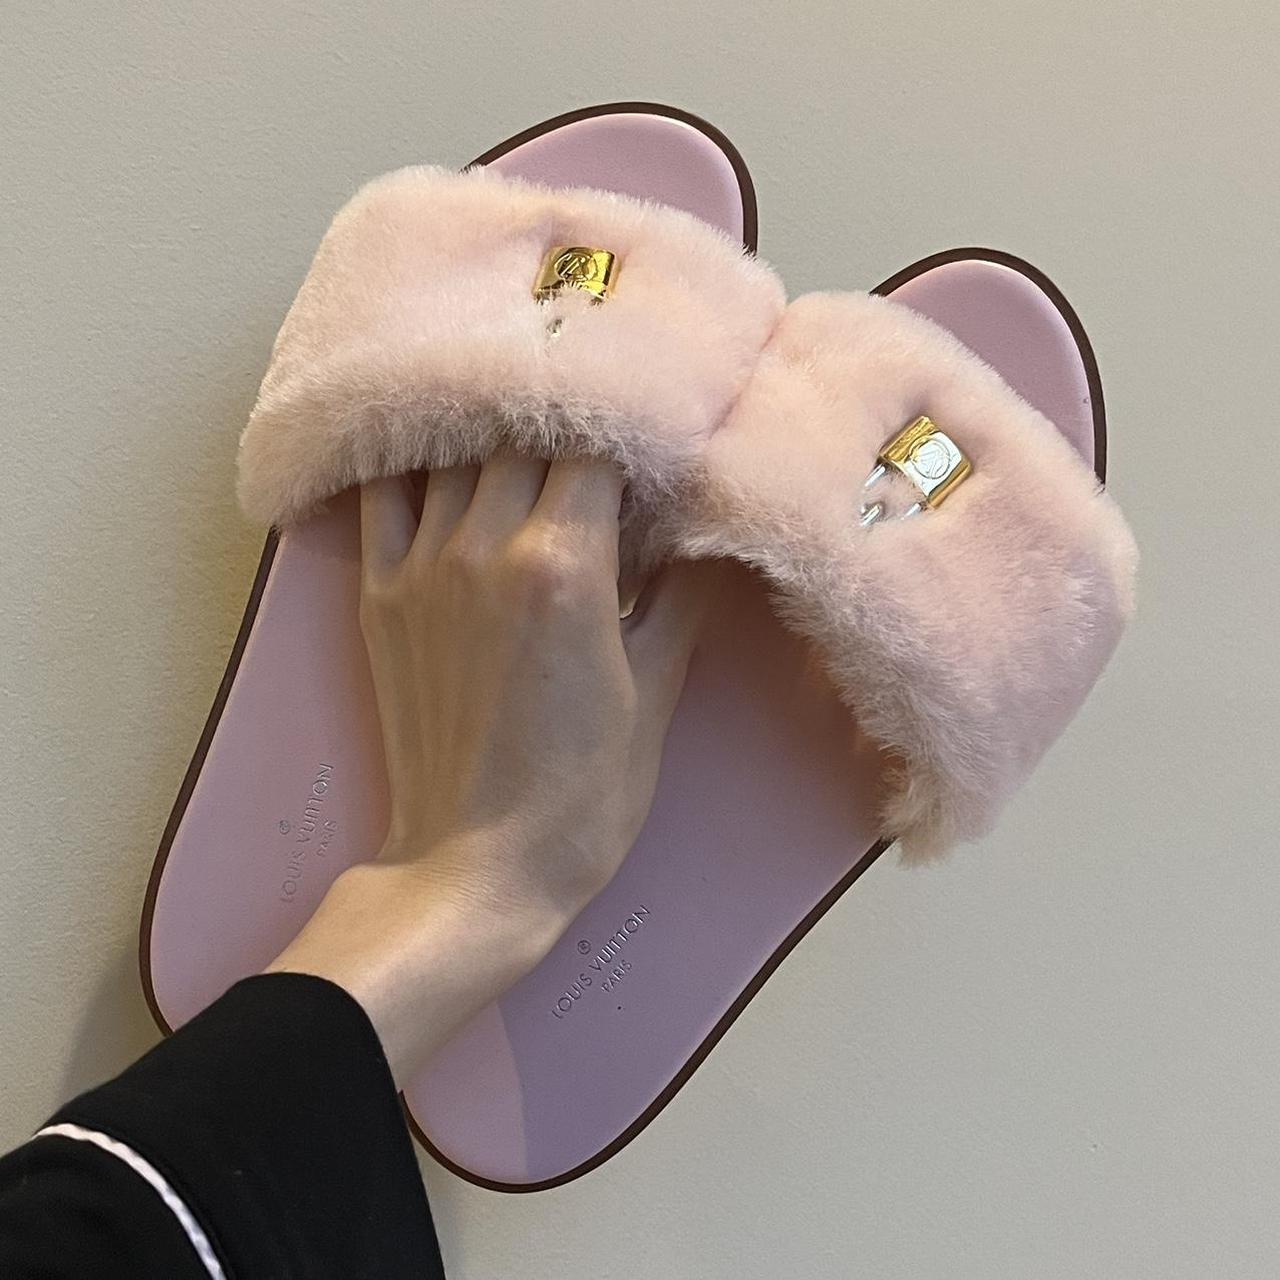 Pre-owned Louis Vuitton Pink Mink Fur Lock It Flat Slides Size 36